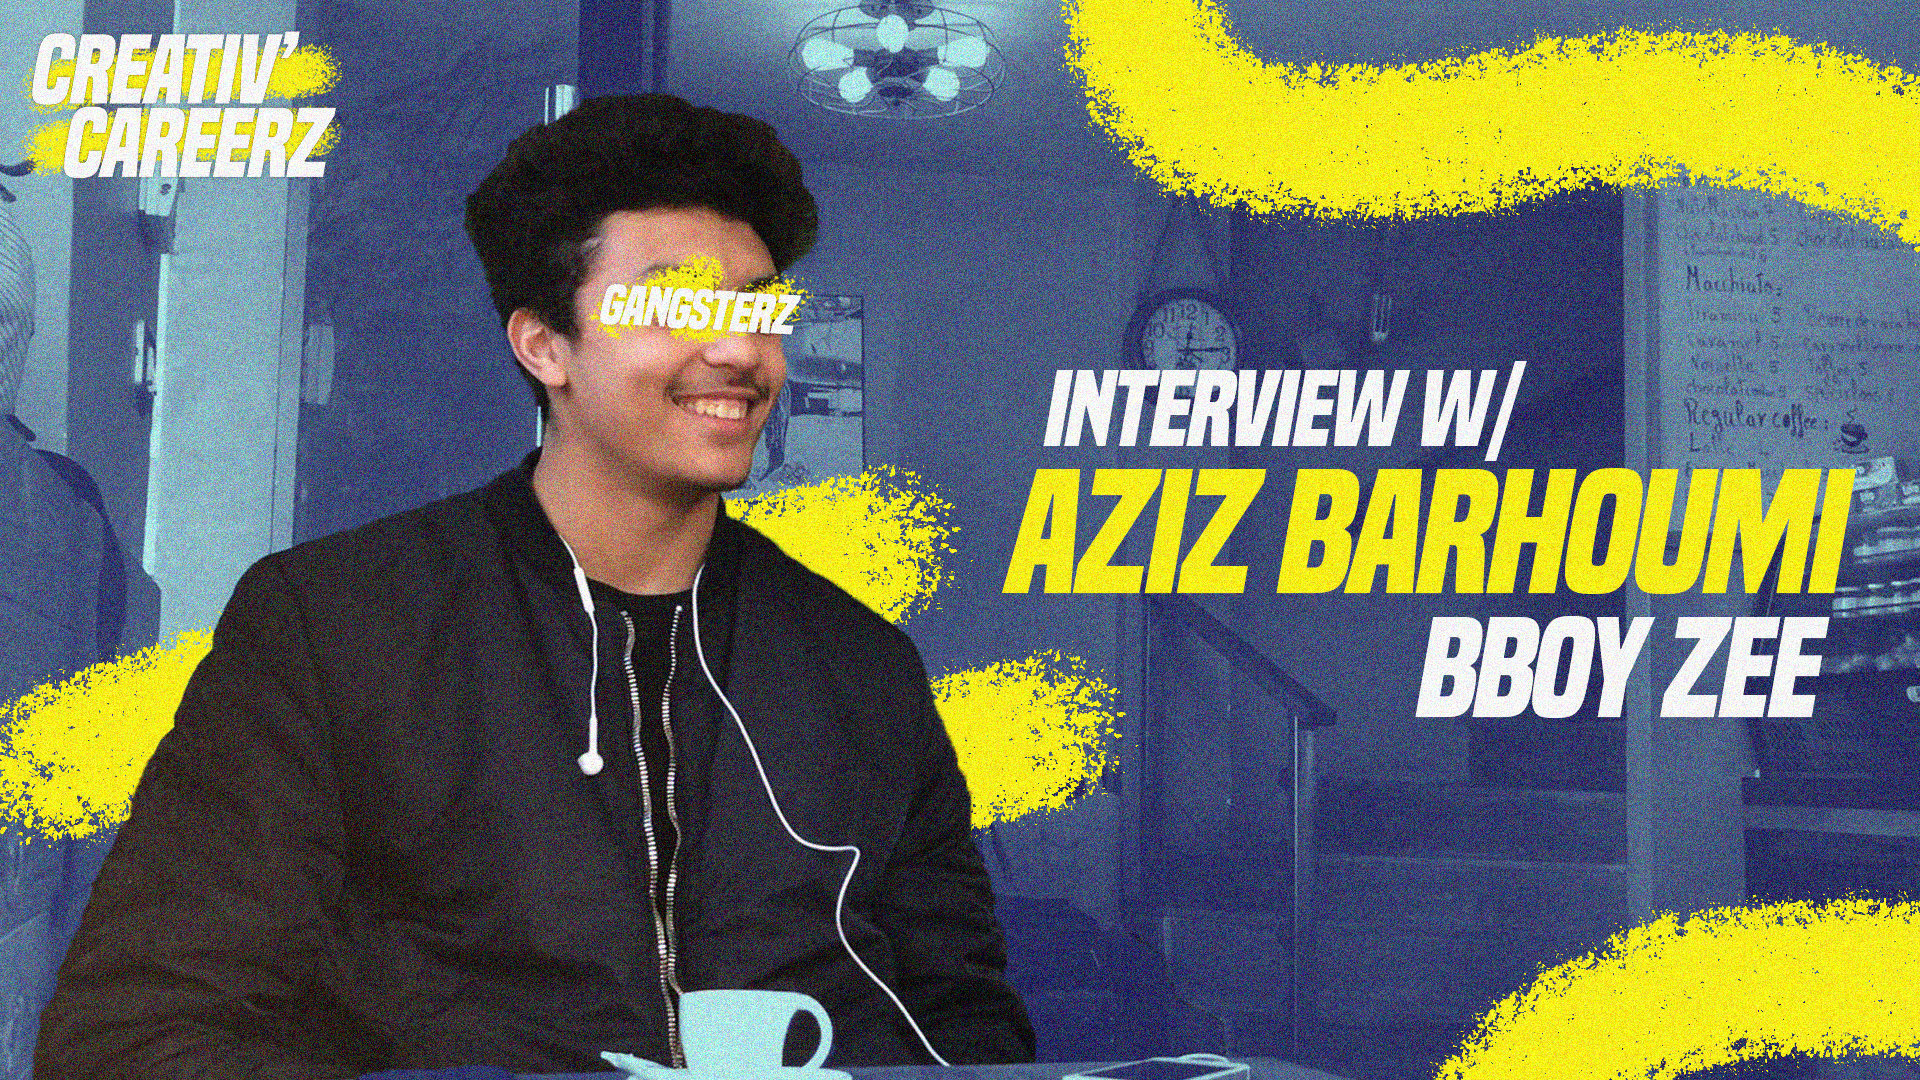 You are currently viewing Creativ’Careerz: Meet Aziz Barhoumi aka Bboy ZEE